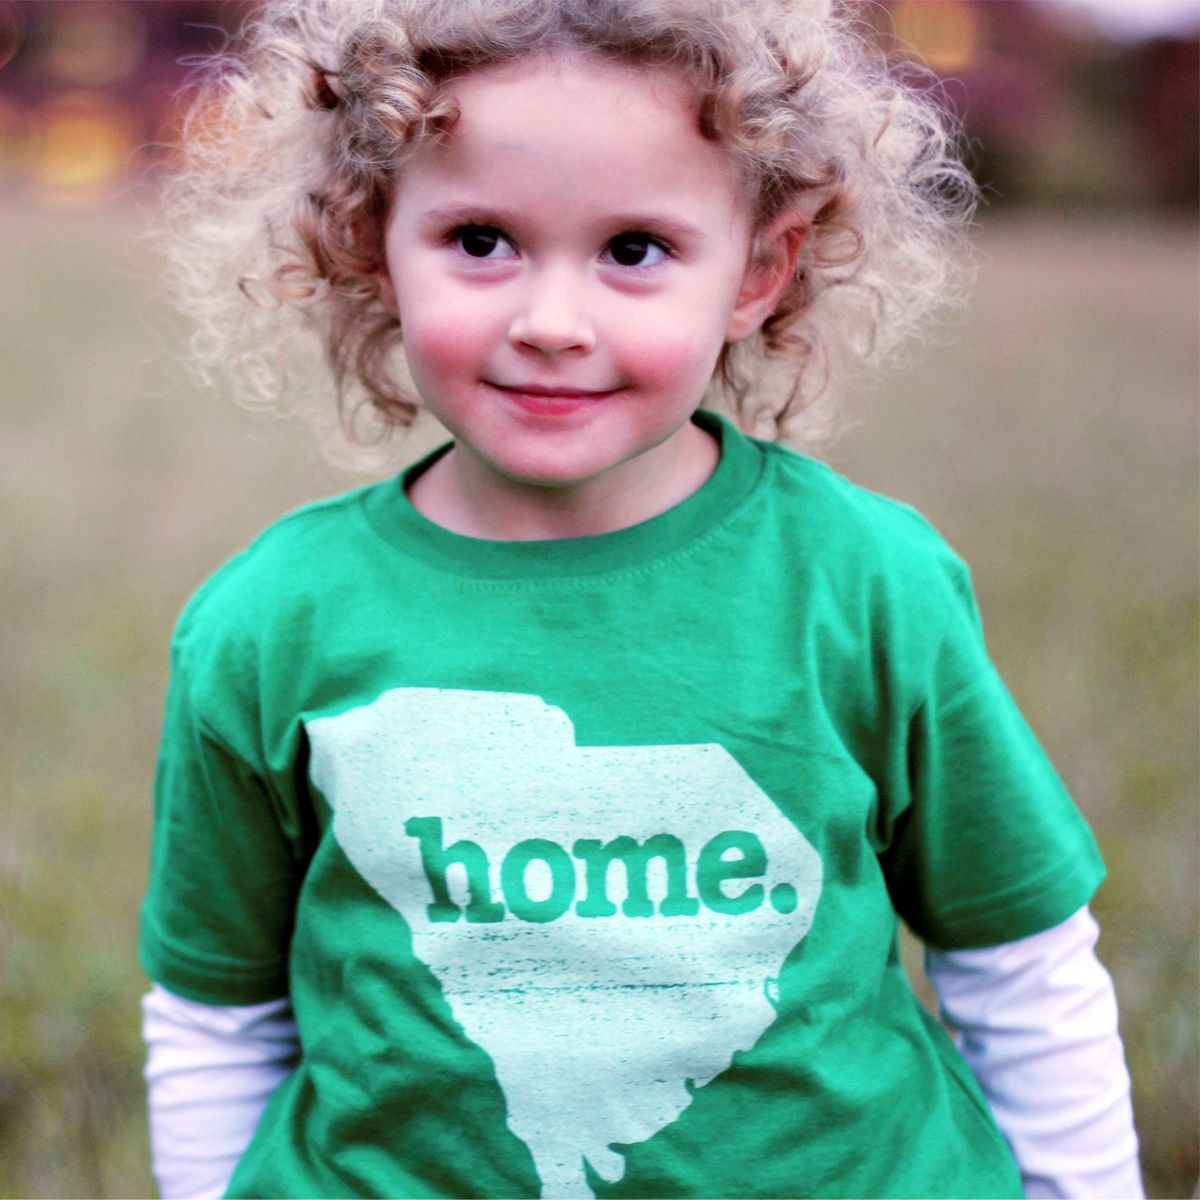 home. Youth/Toddler T-Shirt - North Dakota